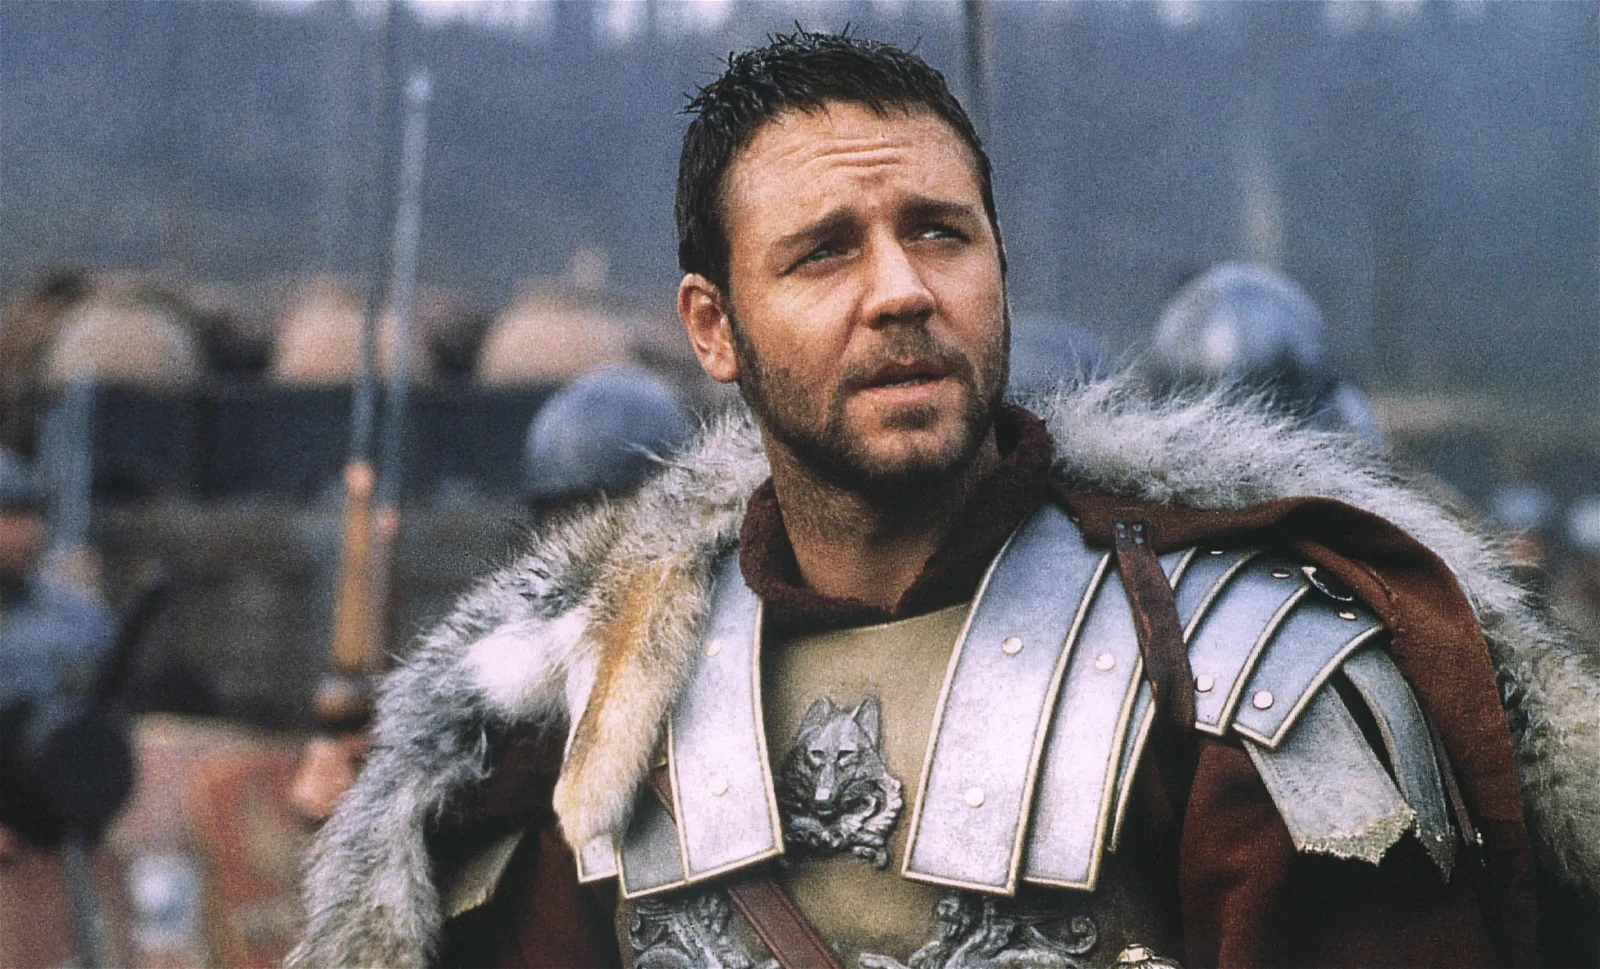 Russel Crowe as Maximus in Gladiator 